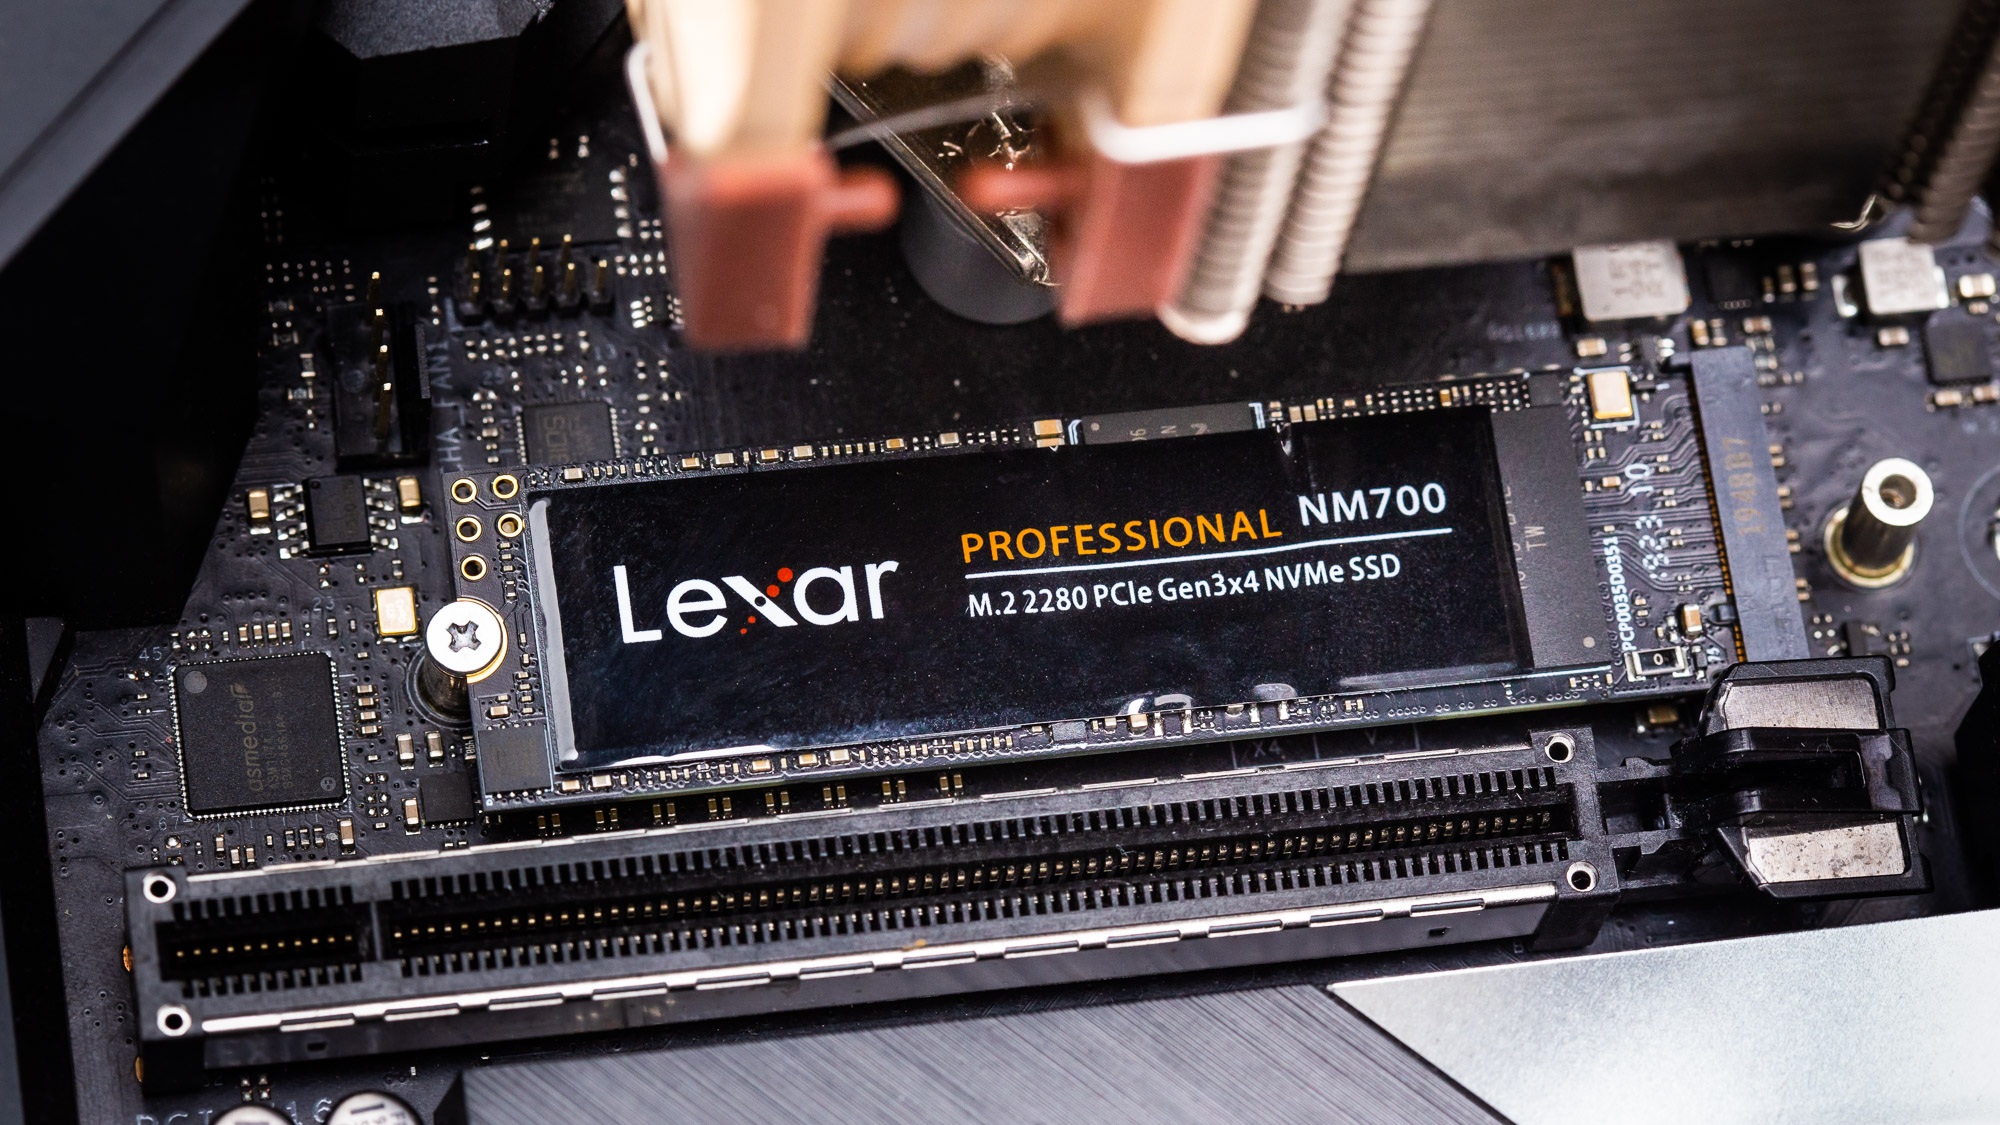 Lexar Professional NM700 M.2 SSD Review: Sluggish Performance From 